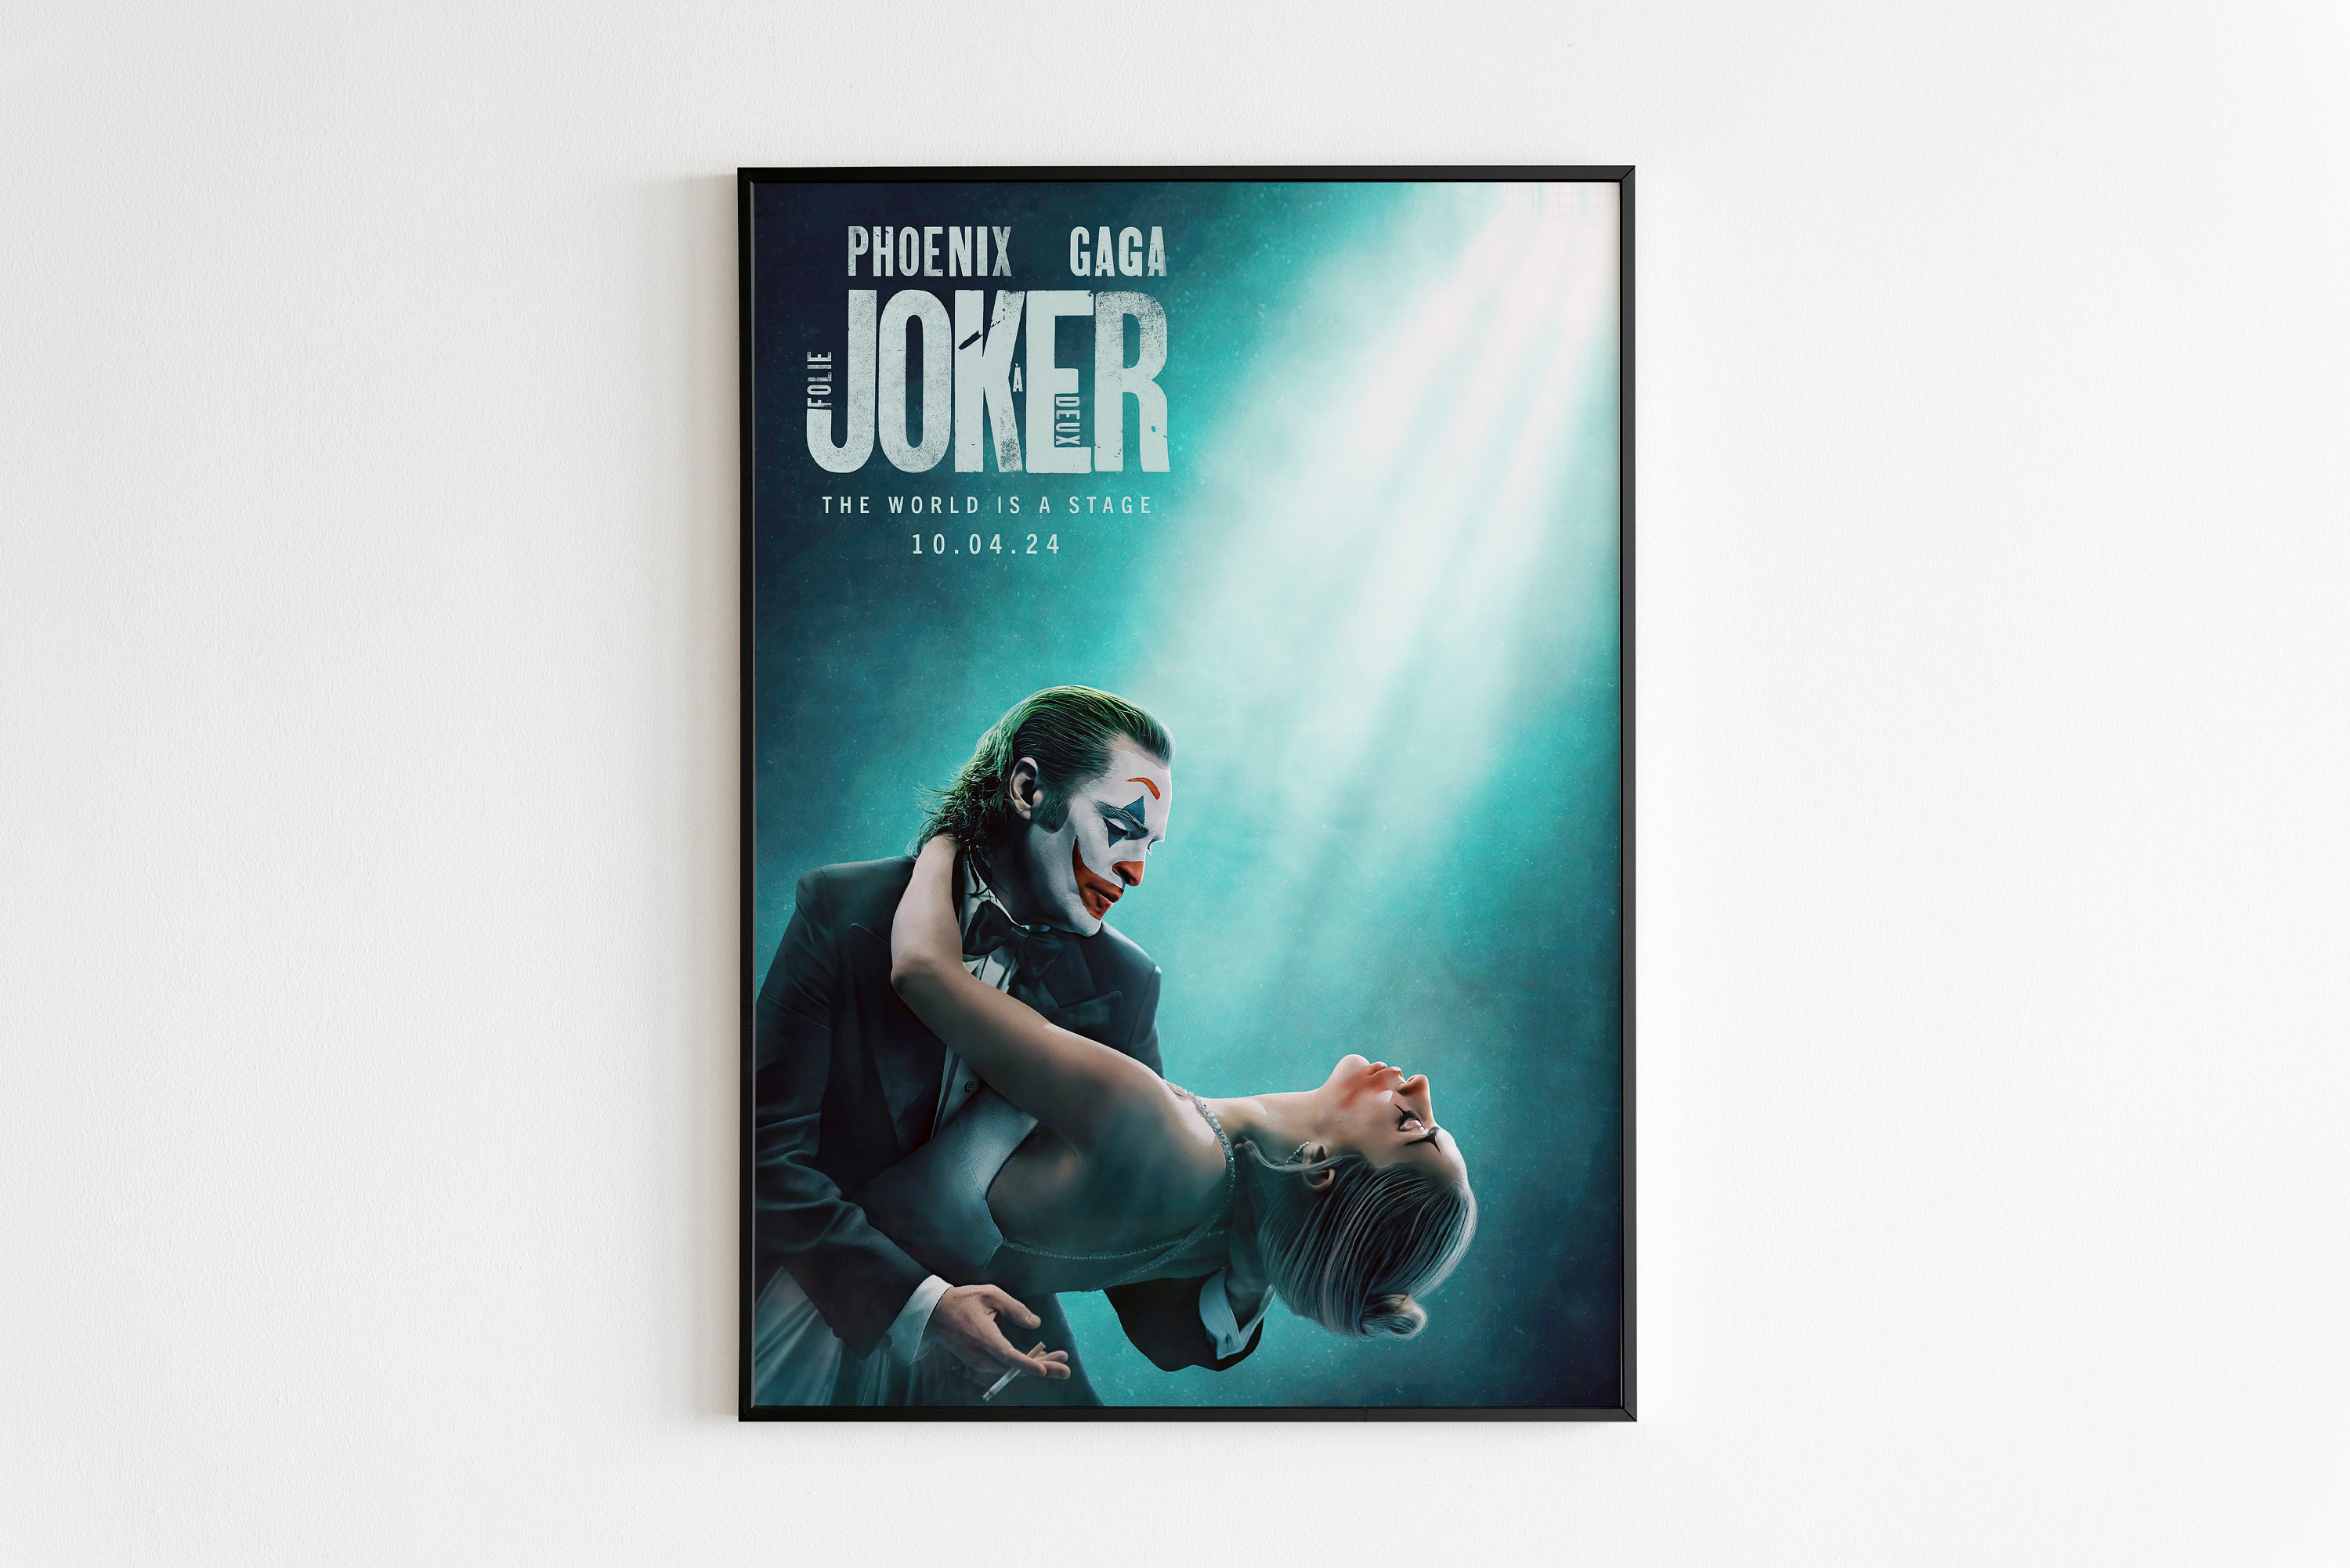 Discover Cartel de Joker Folie à Deux, Póster de Joker 2, Joaquin Phoenix, Arthur Fleck